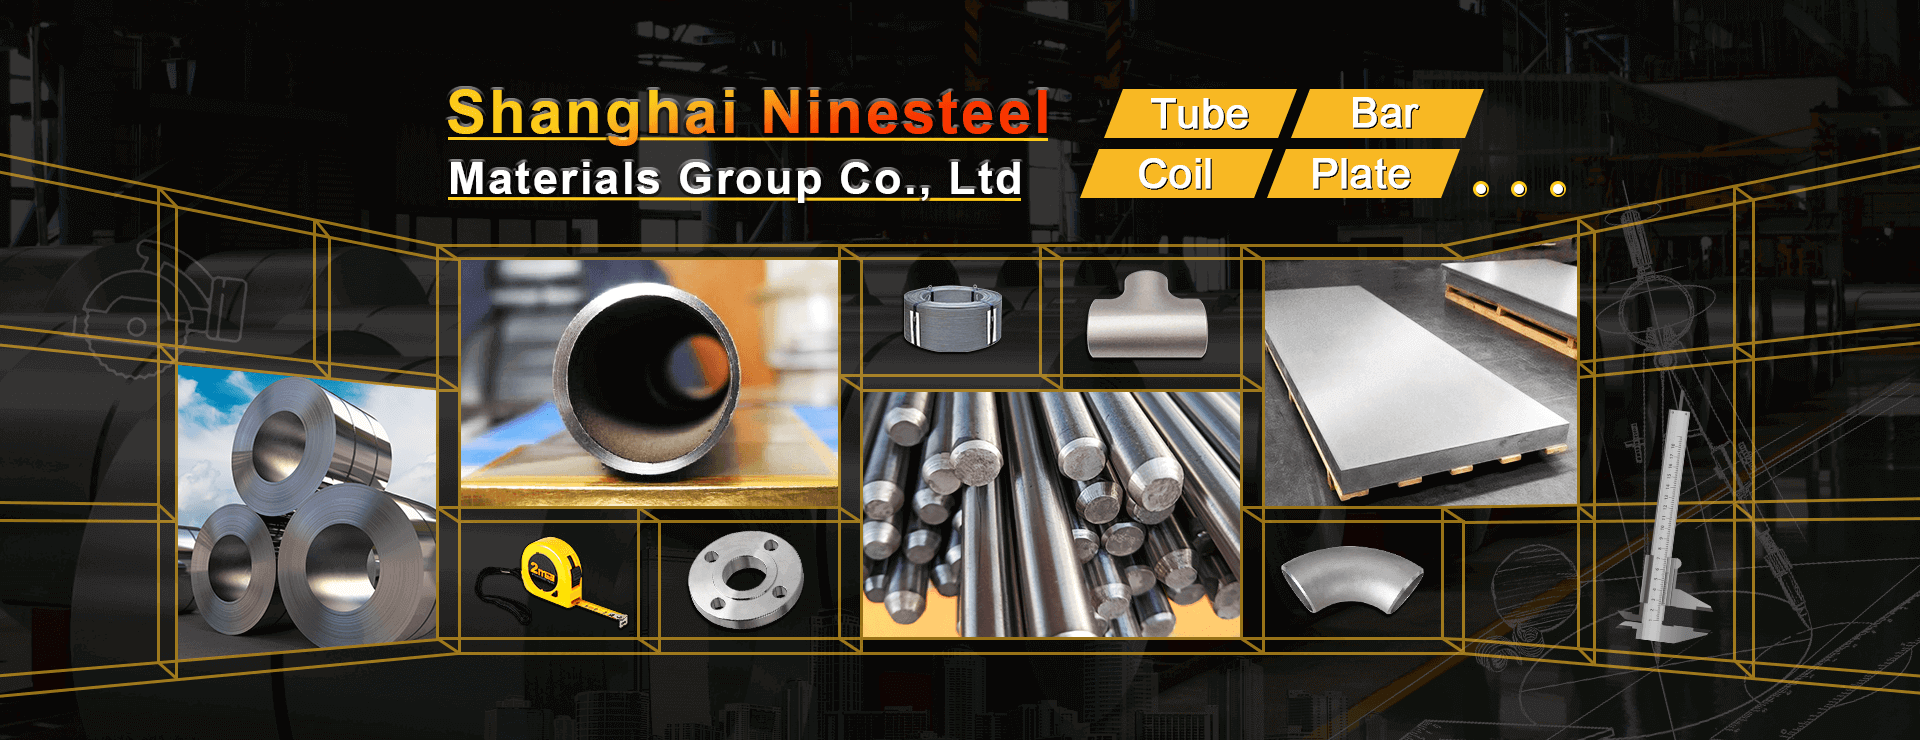 Ninesteel stainless steel and nickel alloy supply